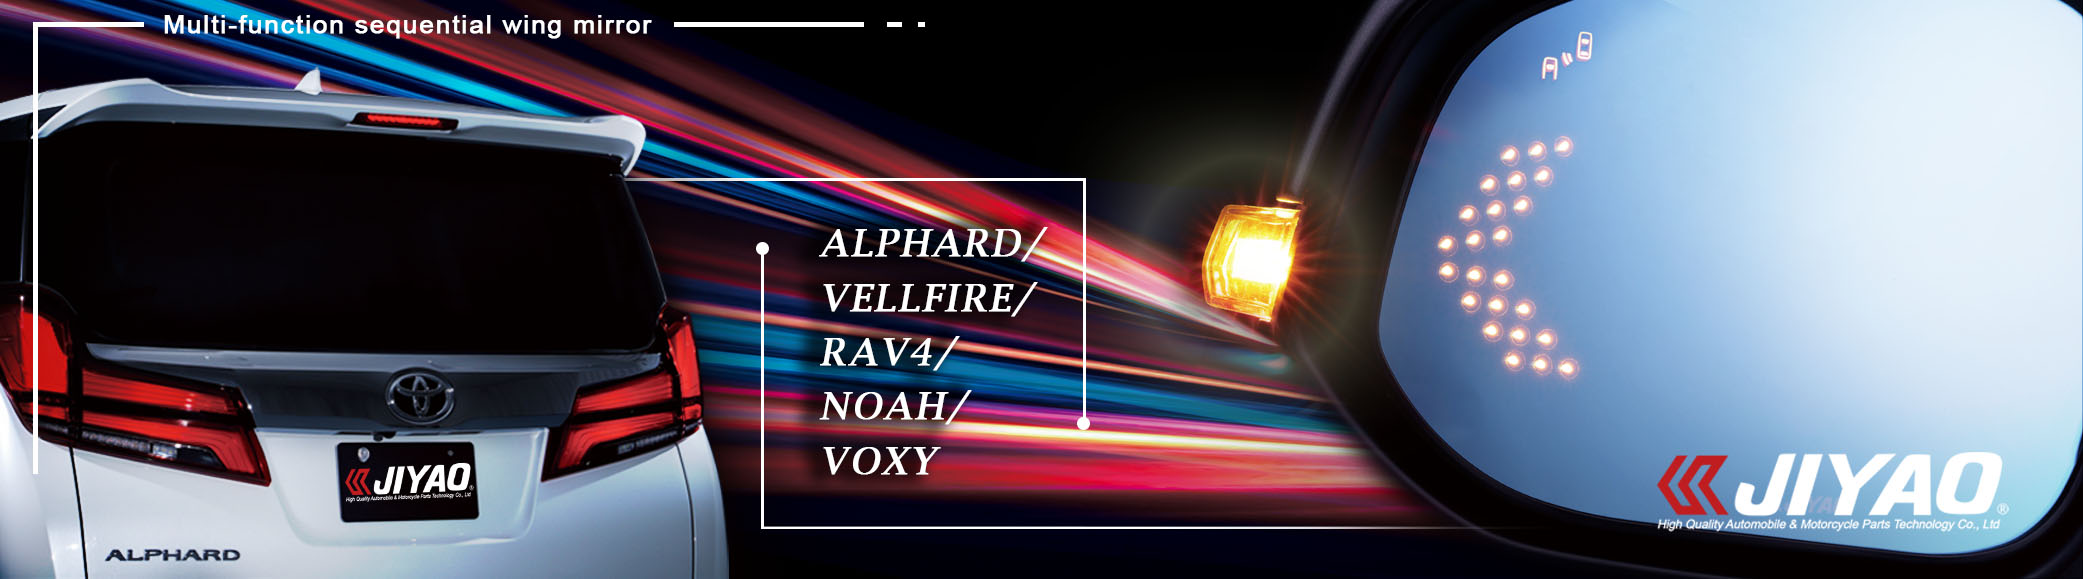 TOYOTA ALPHARD VELLFIRE RAV4 NOAH VOXY 多功能序列式鏡片燈